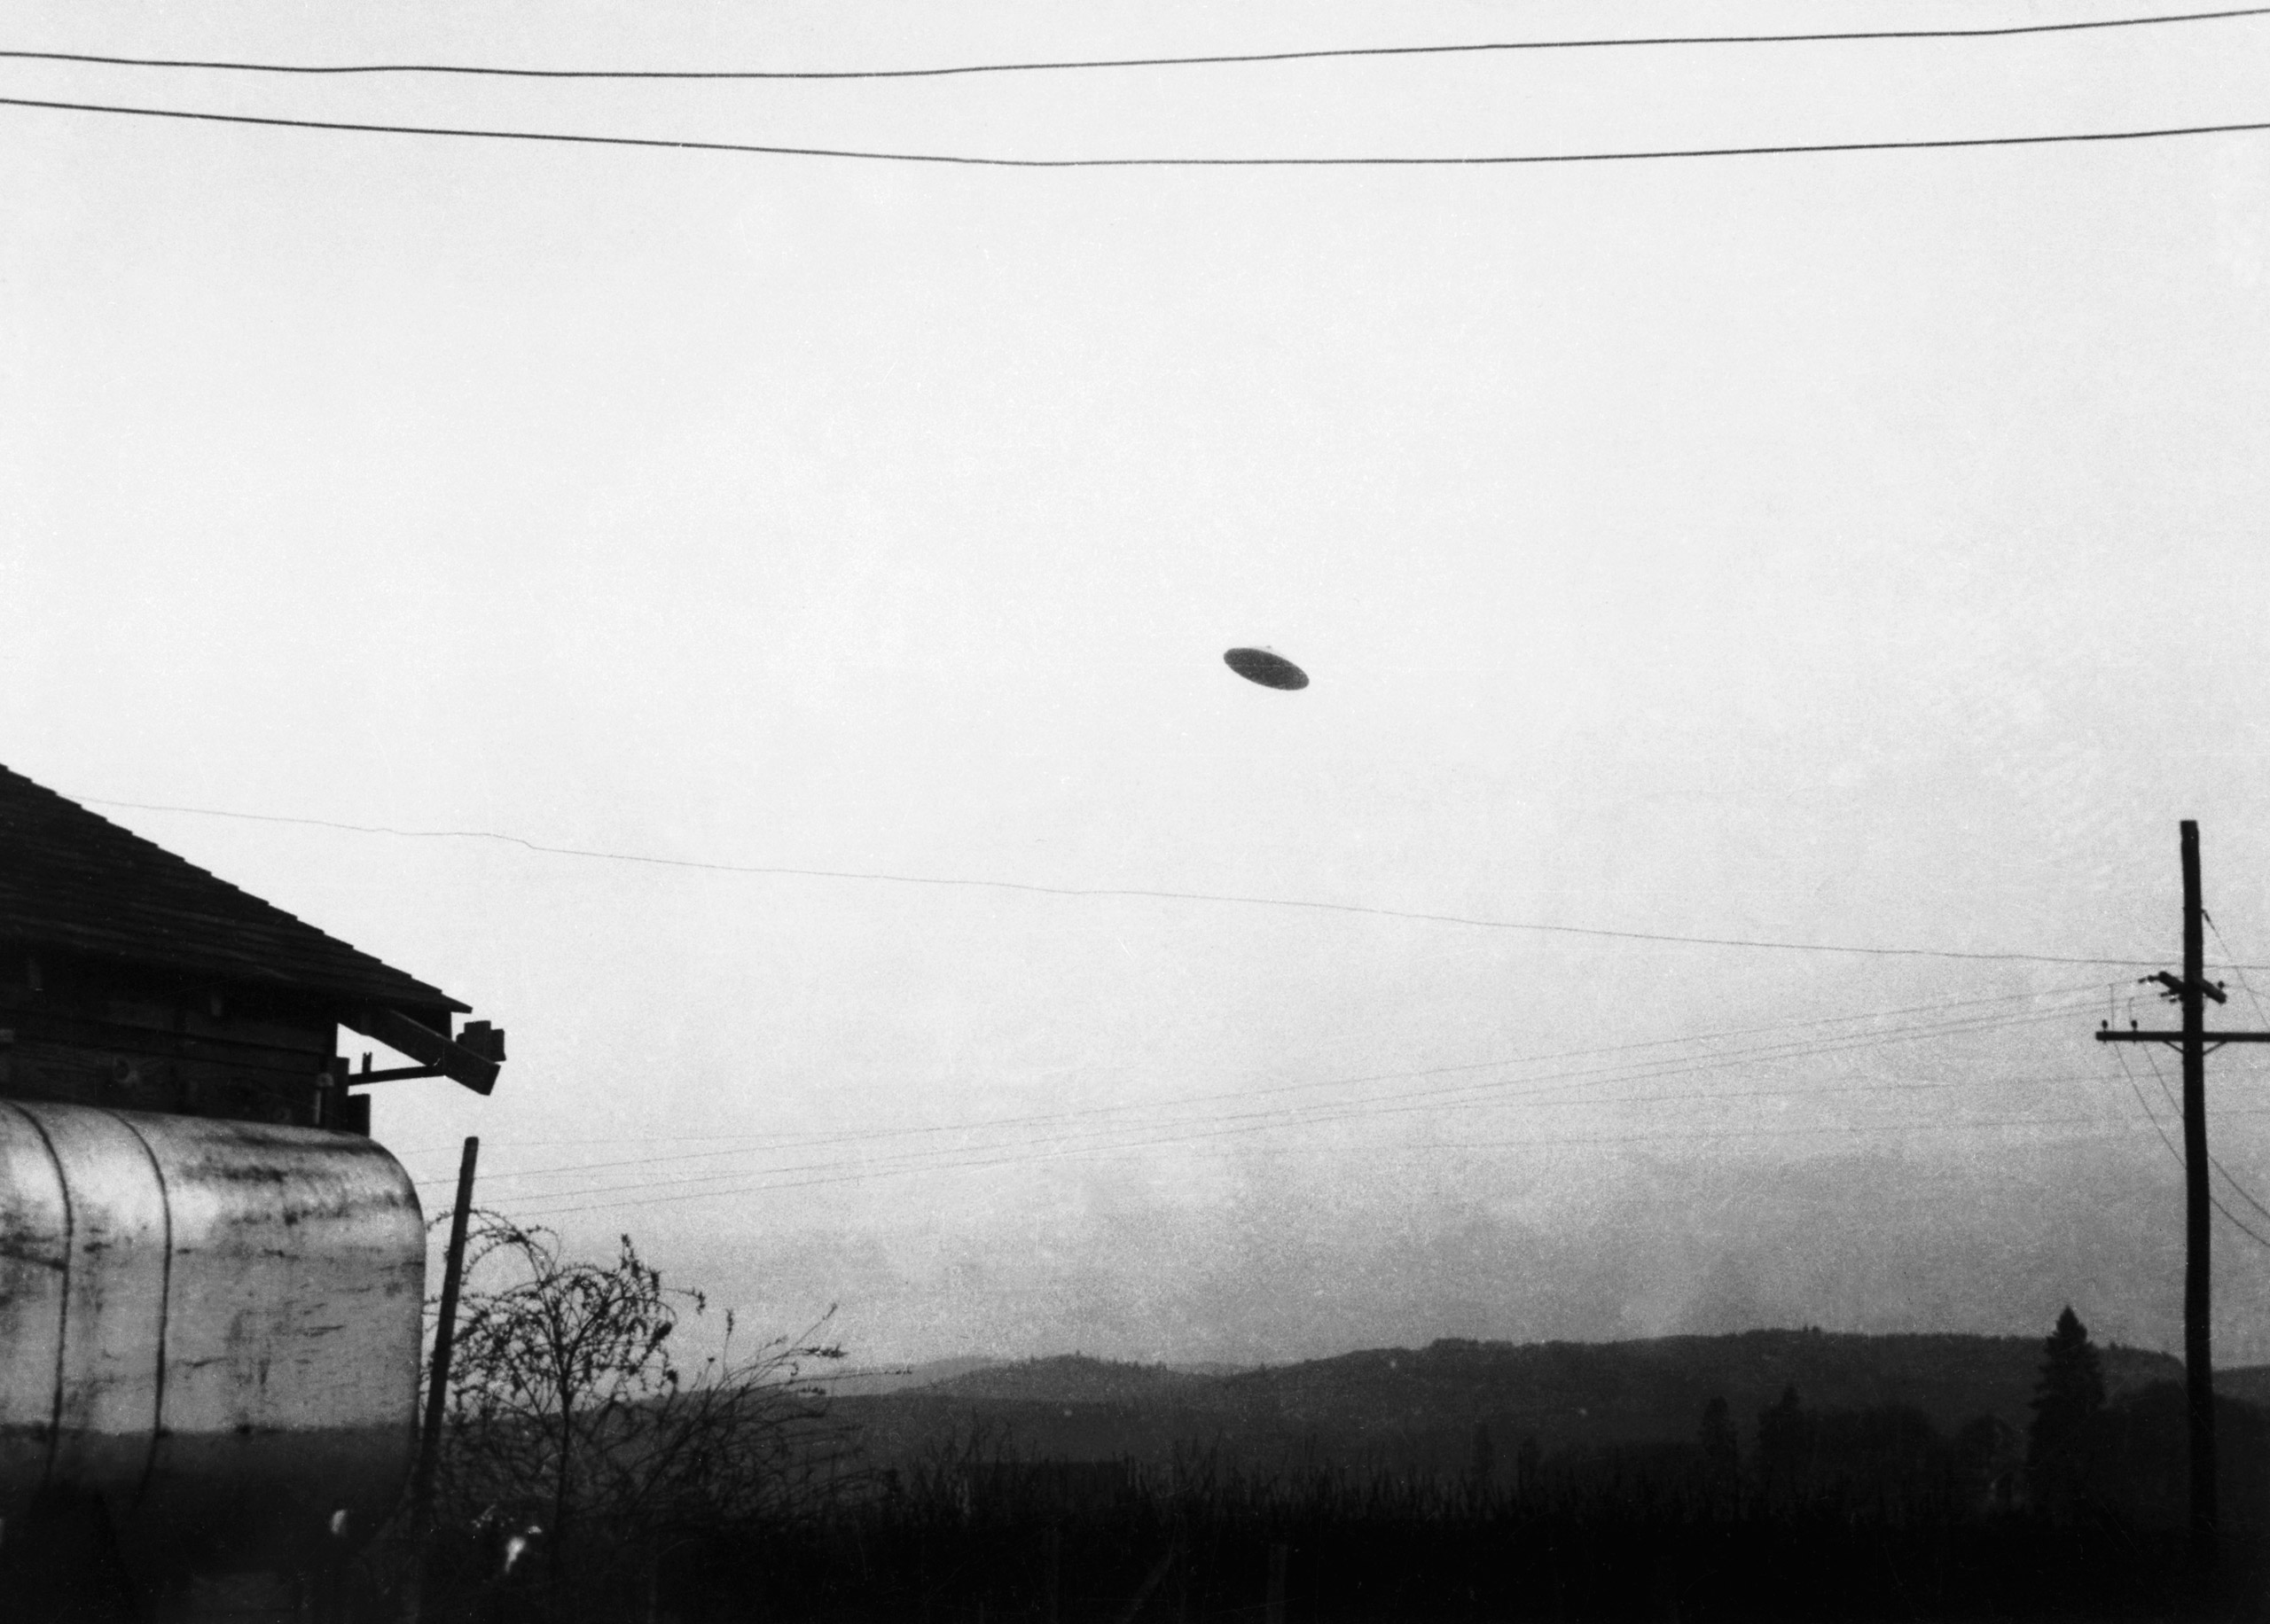 UFO1.jpg